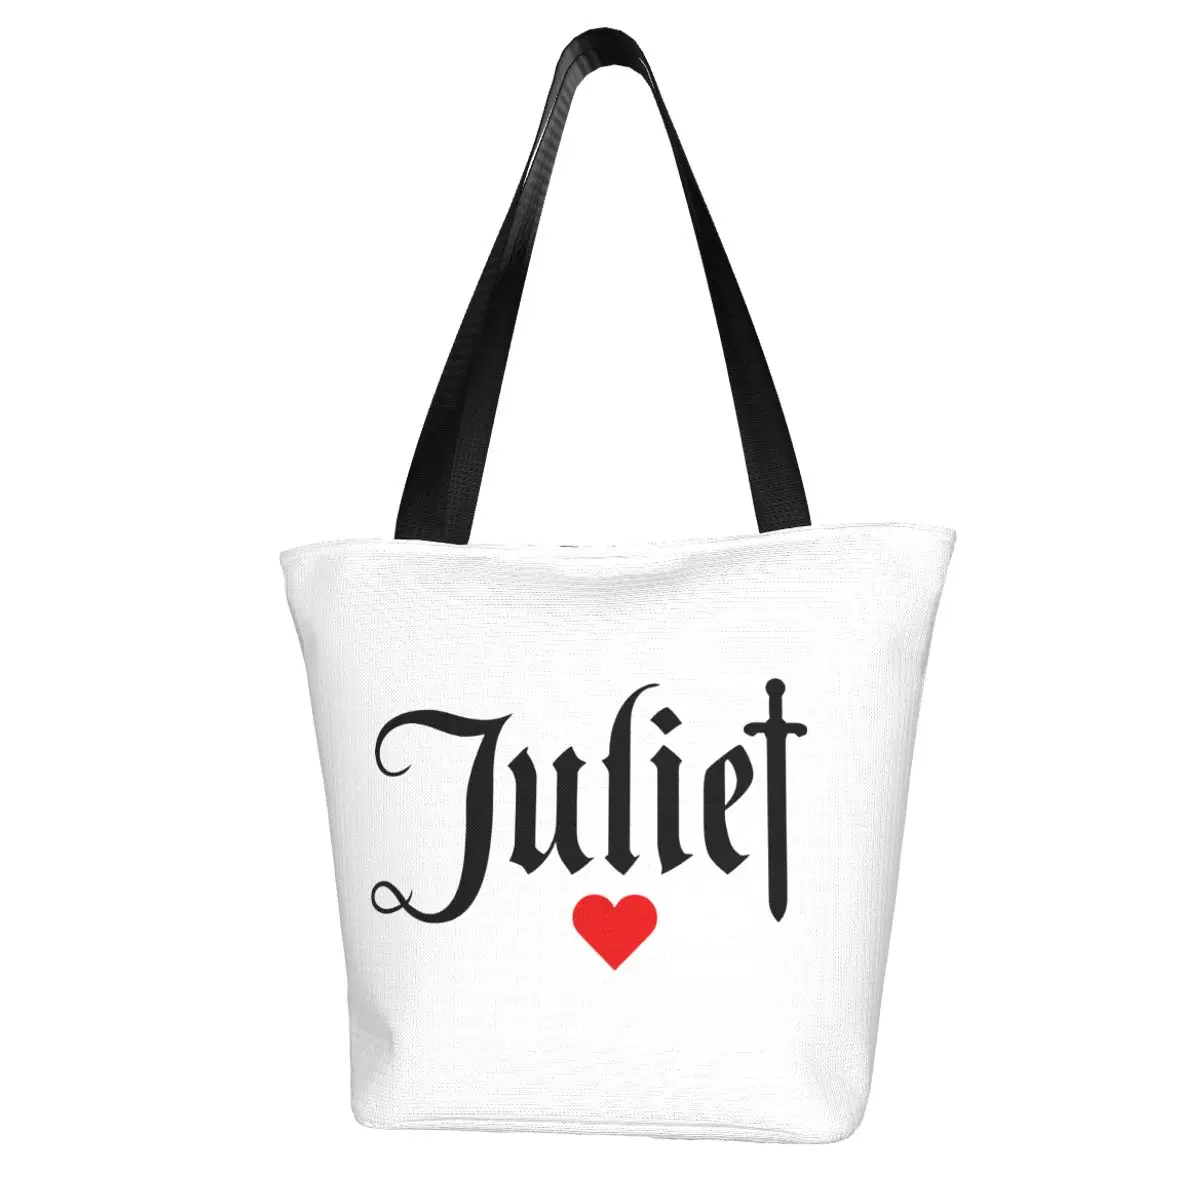 Juliet Shopping Bag Aesthetic Cloth Outdoor Handbag Female Fashion Bags